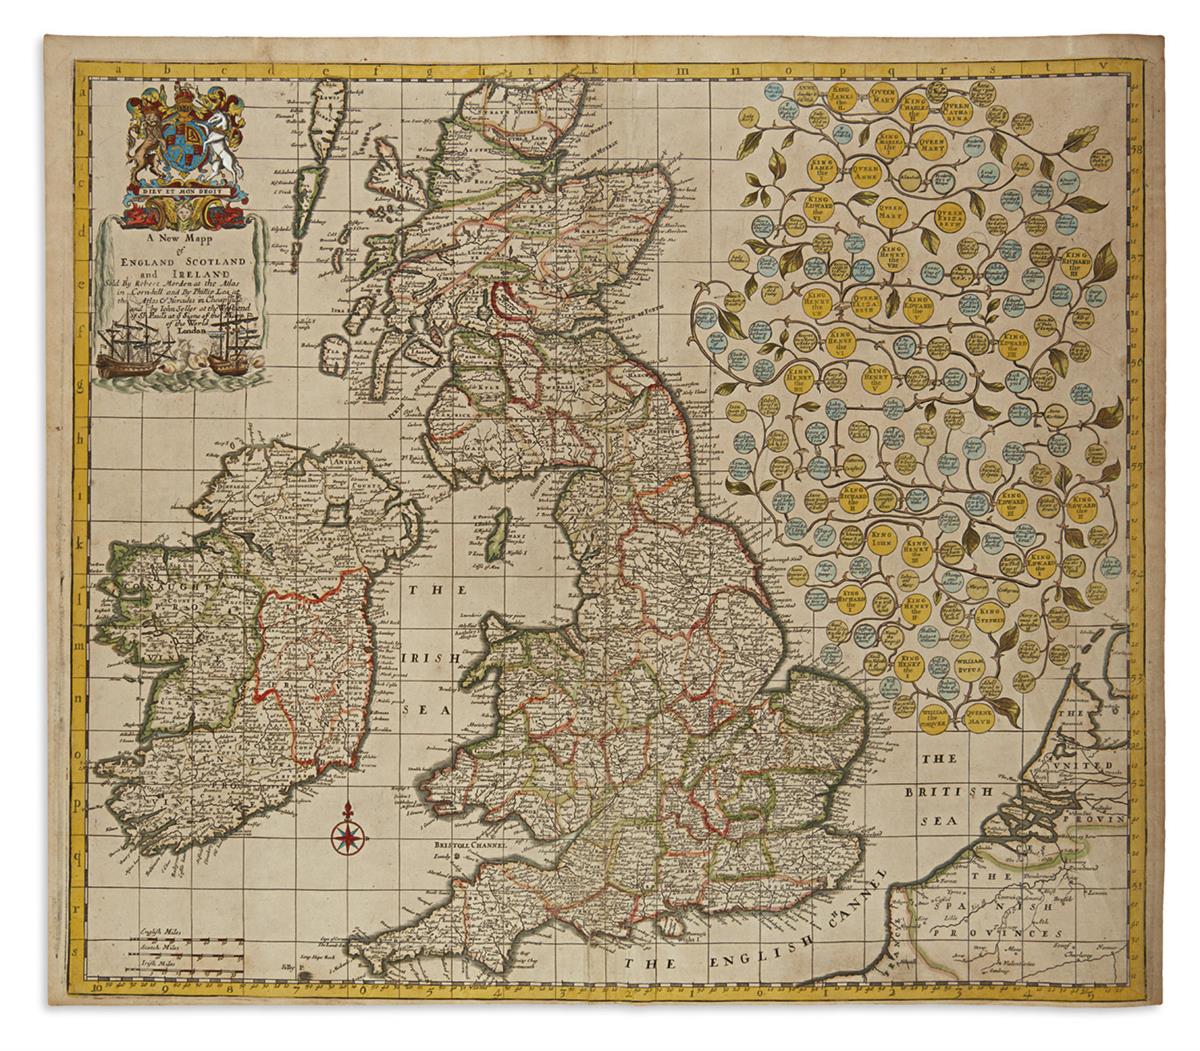 MORDEN, ROBERT. A New Mapp of England Scotland and Ireland.